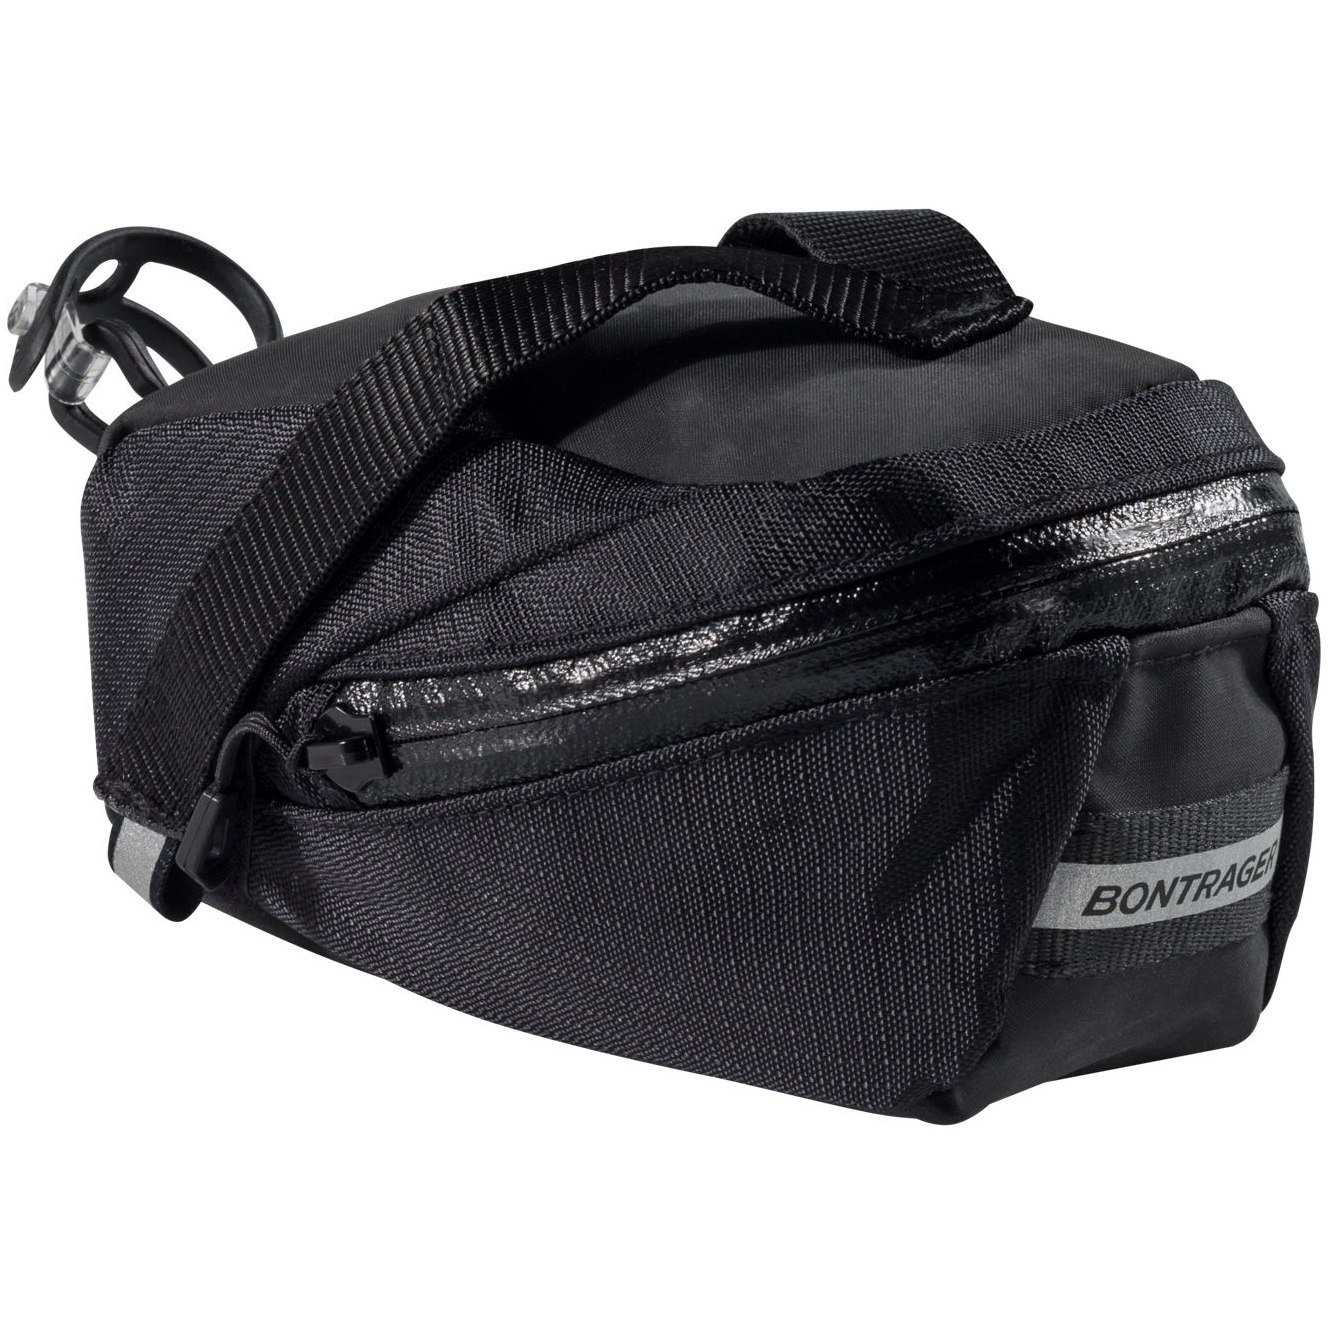 Productfoto van Bontrager Elite Medium Seat Pack - black